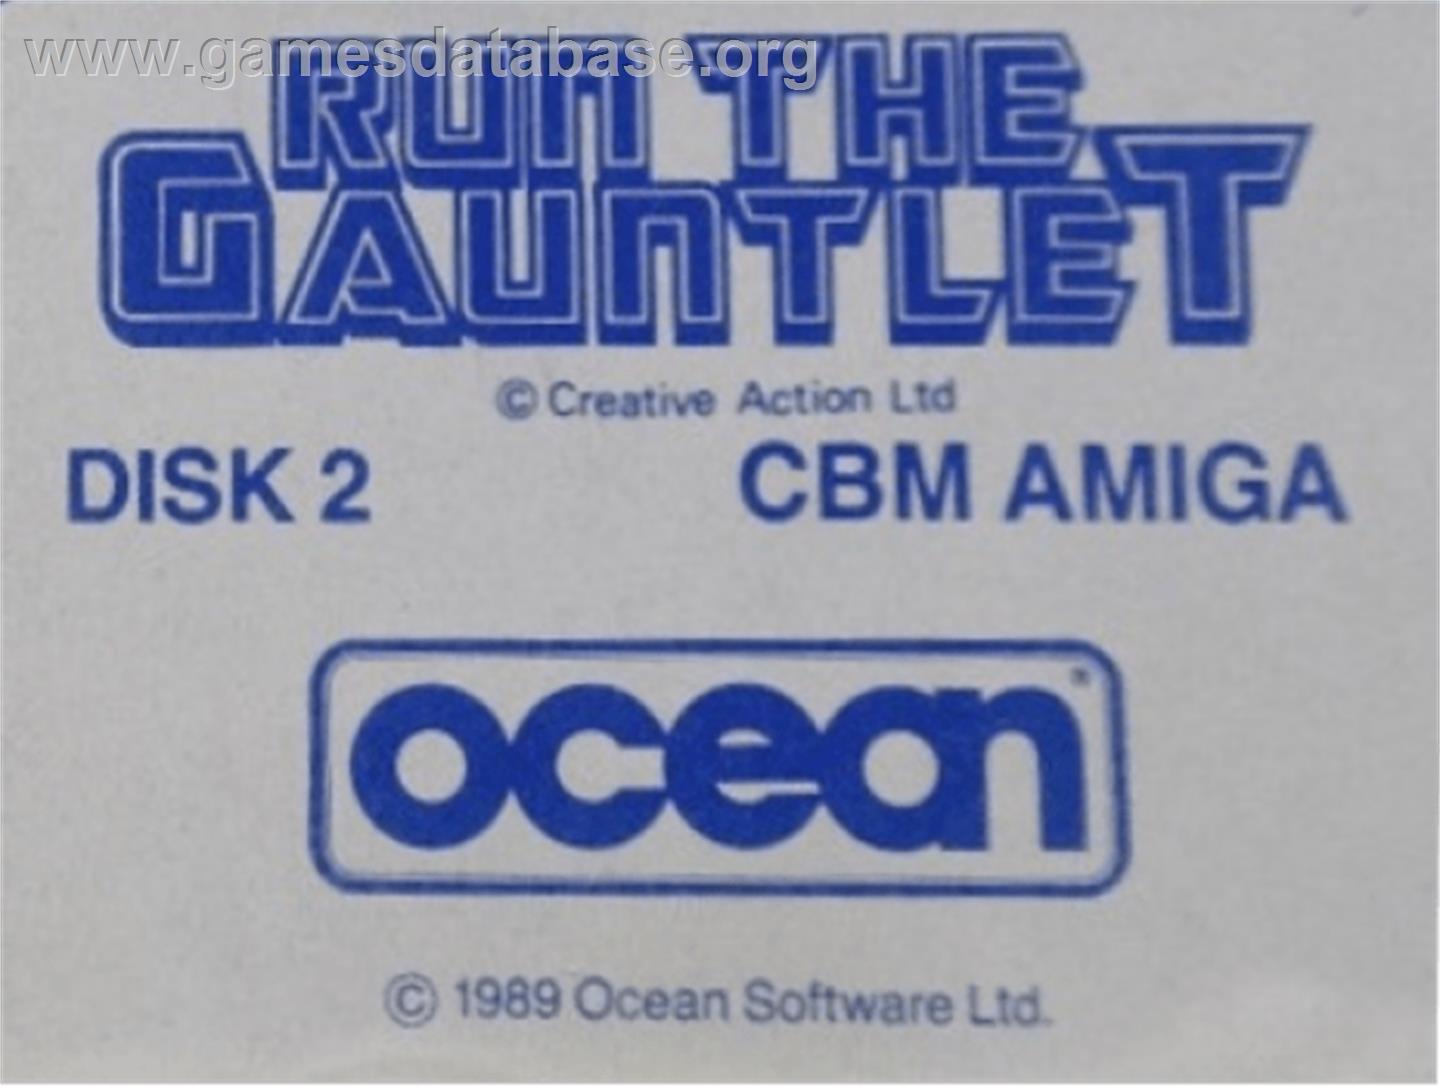 Run the Gauntlet - Commodore Amiga - Artwork - Cartridge Top